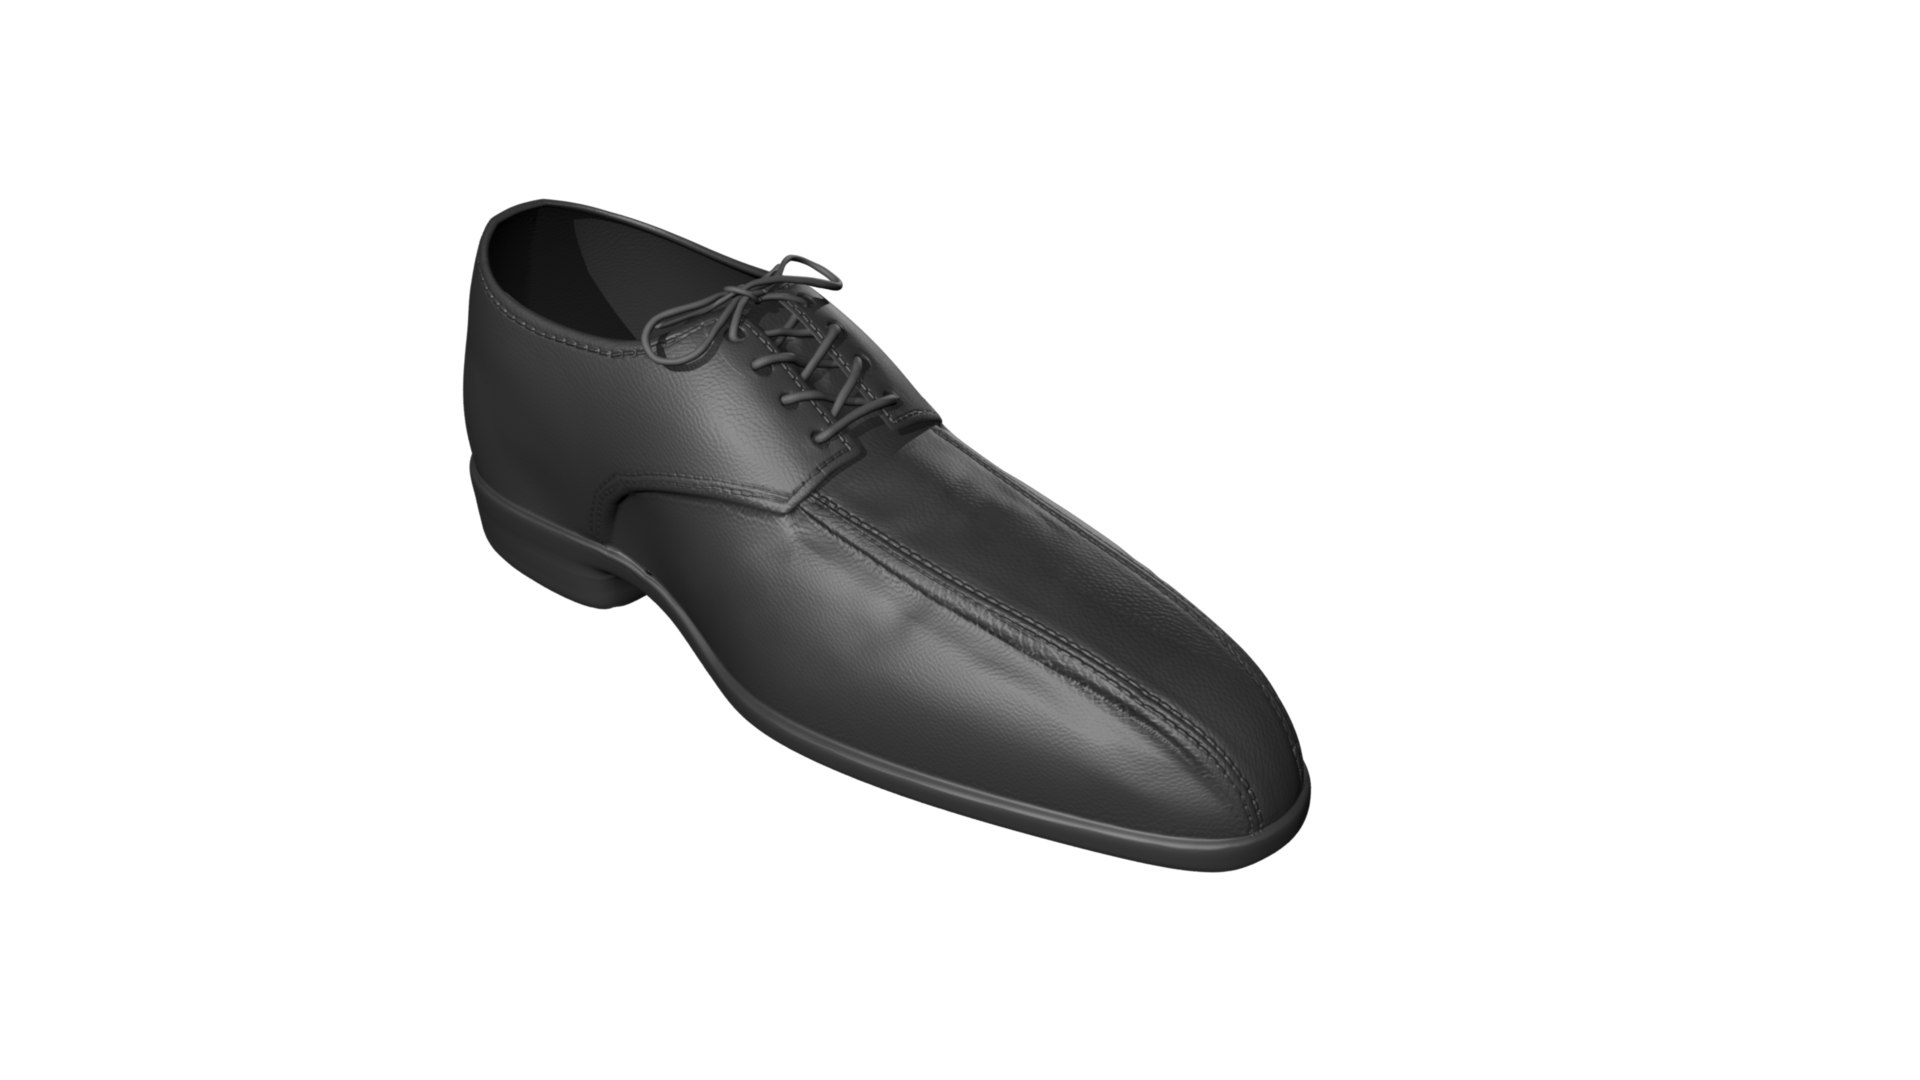 Leather shoe model - TurboSquid 1261309